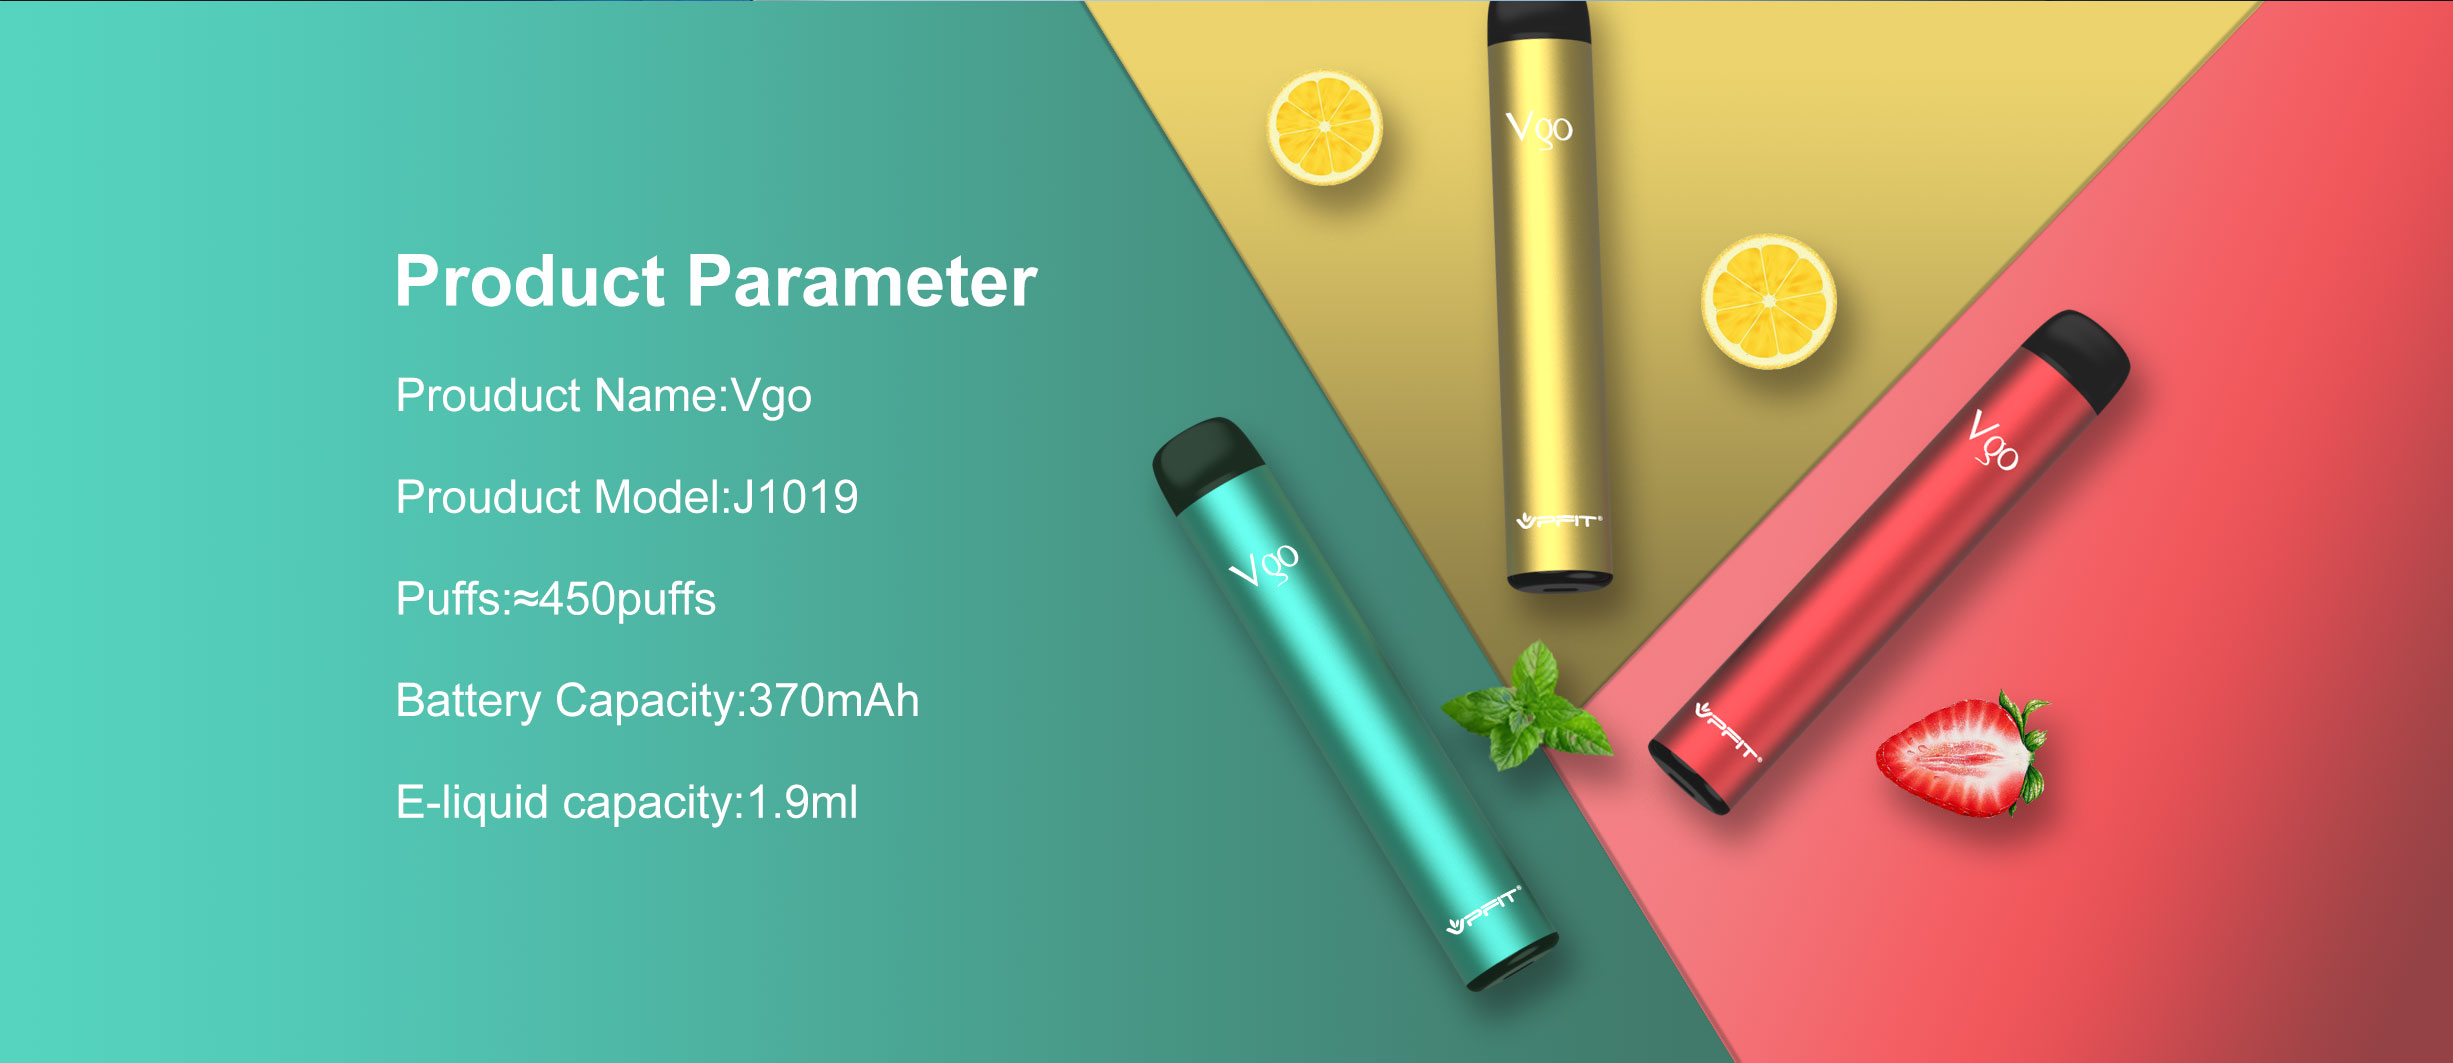 Vgo Nicotine Pod Vape System 500 Puffs Slim Vape main parameters